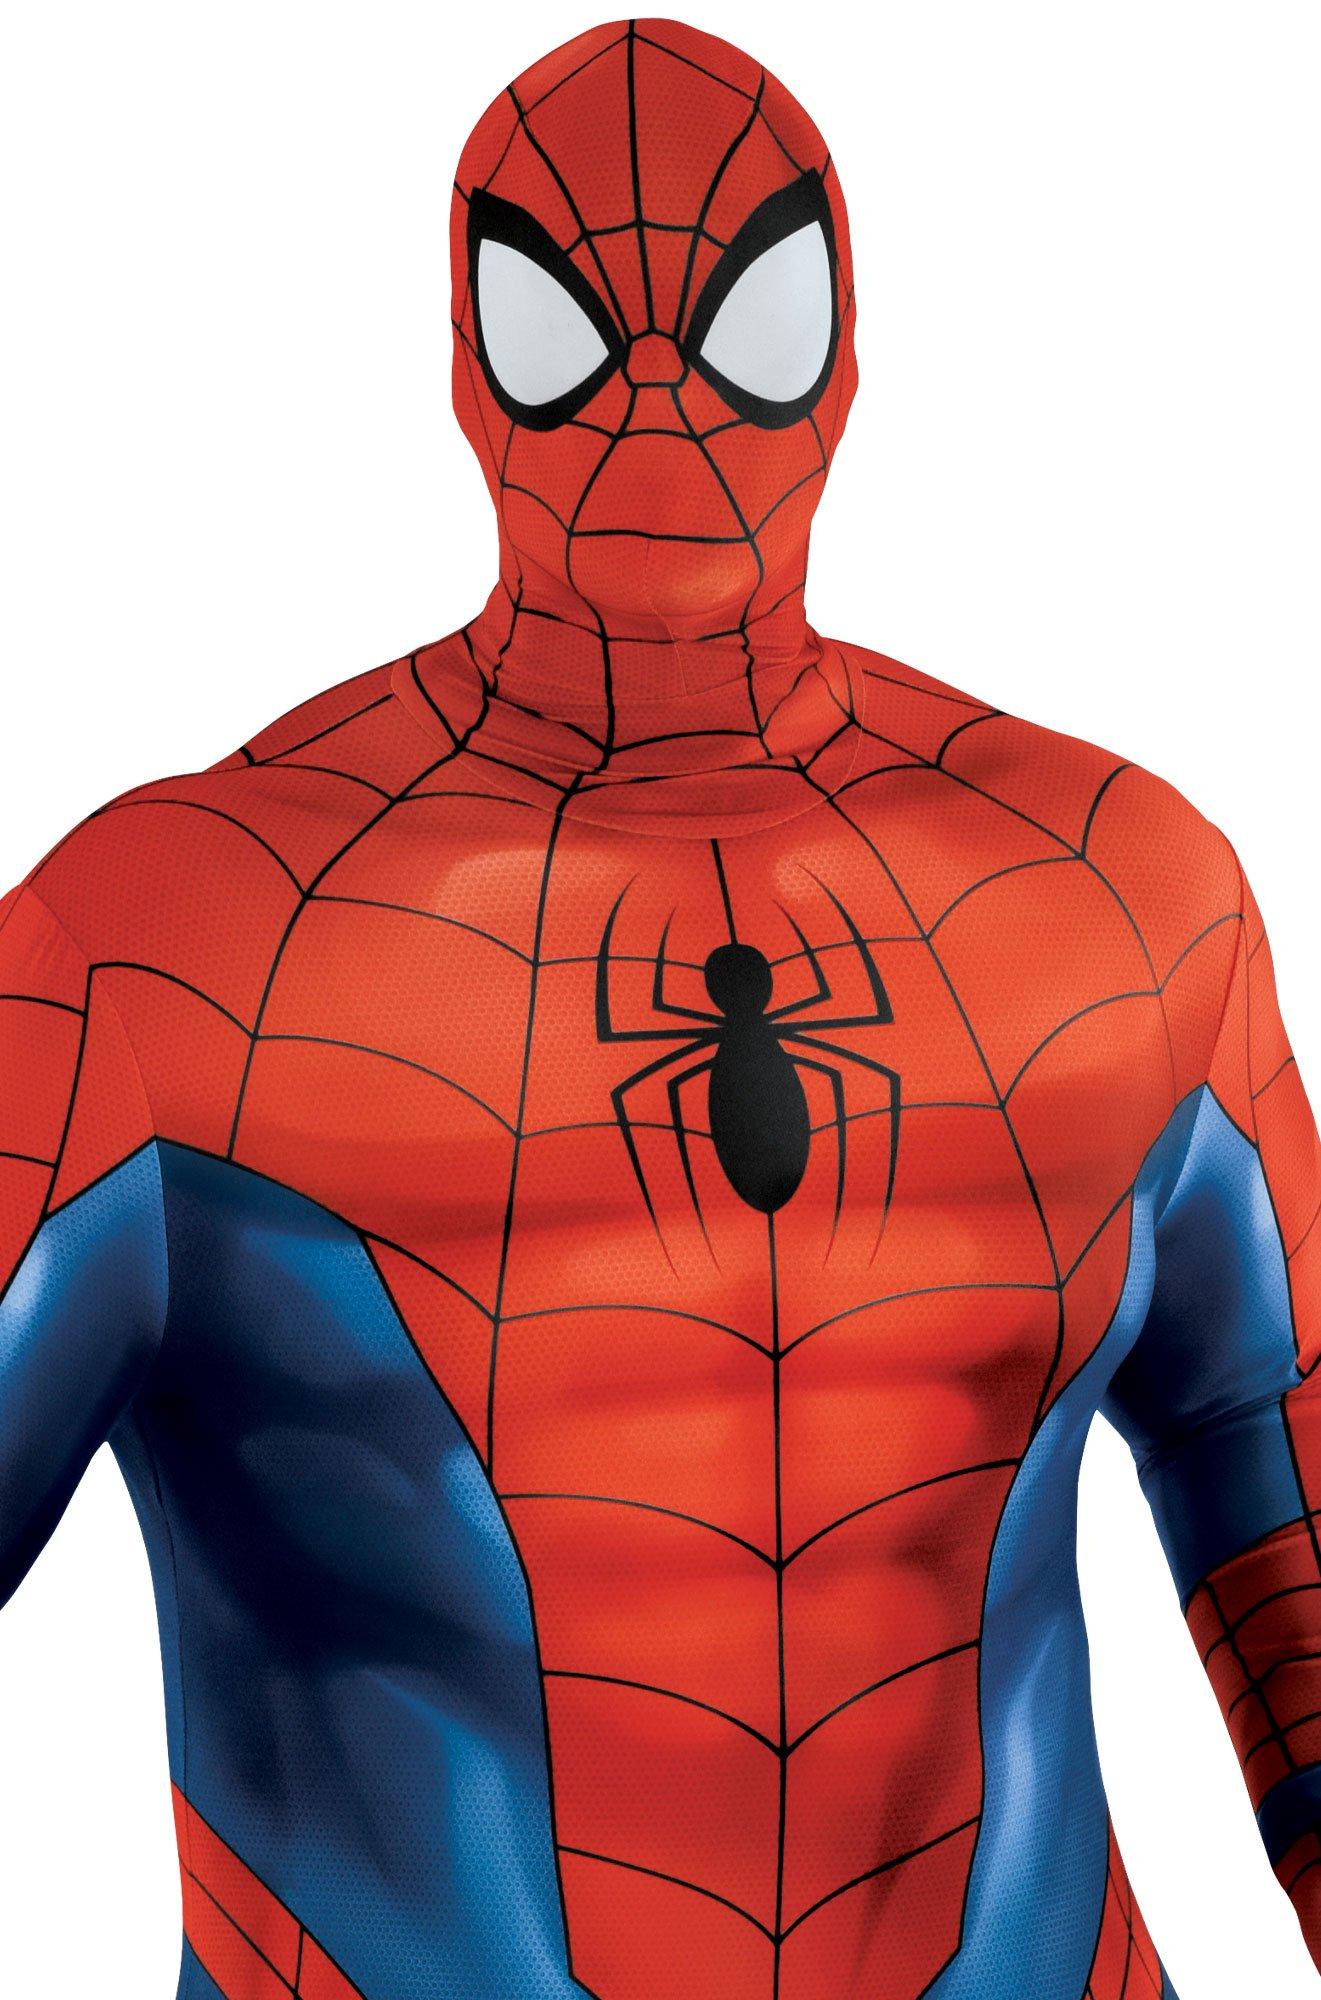 Adult Spider-Man Plus Size Sweatsuit Costume - Marvel